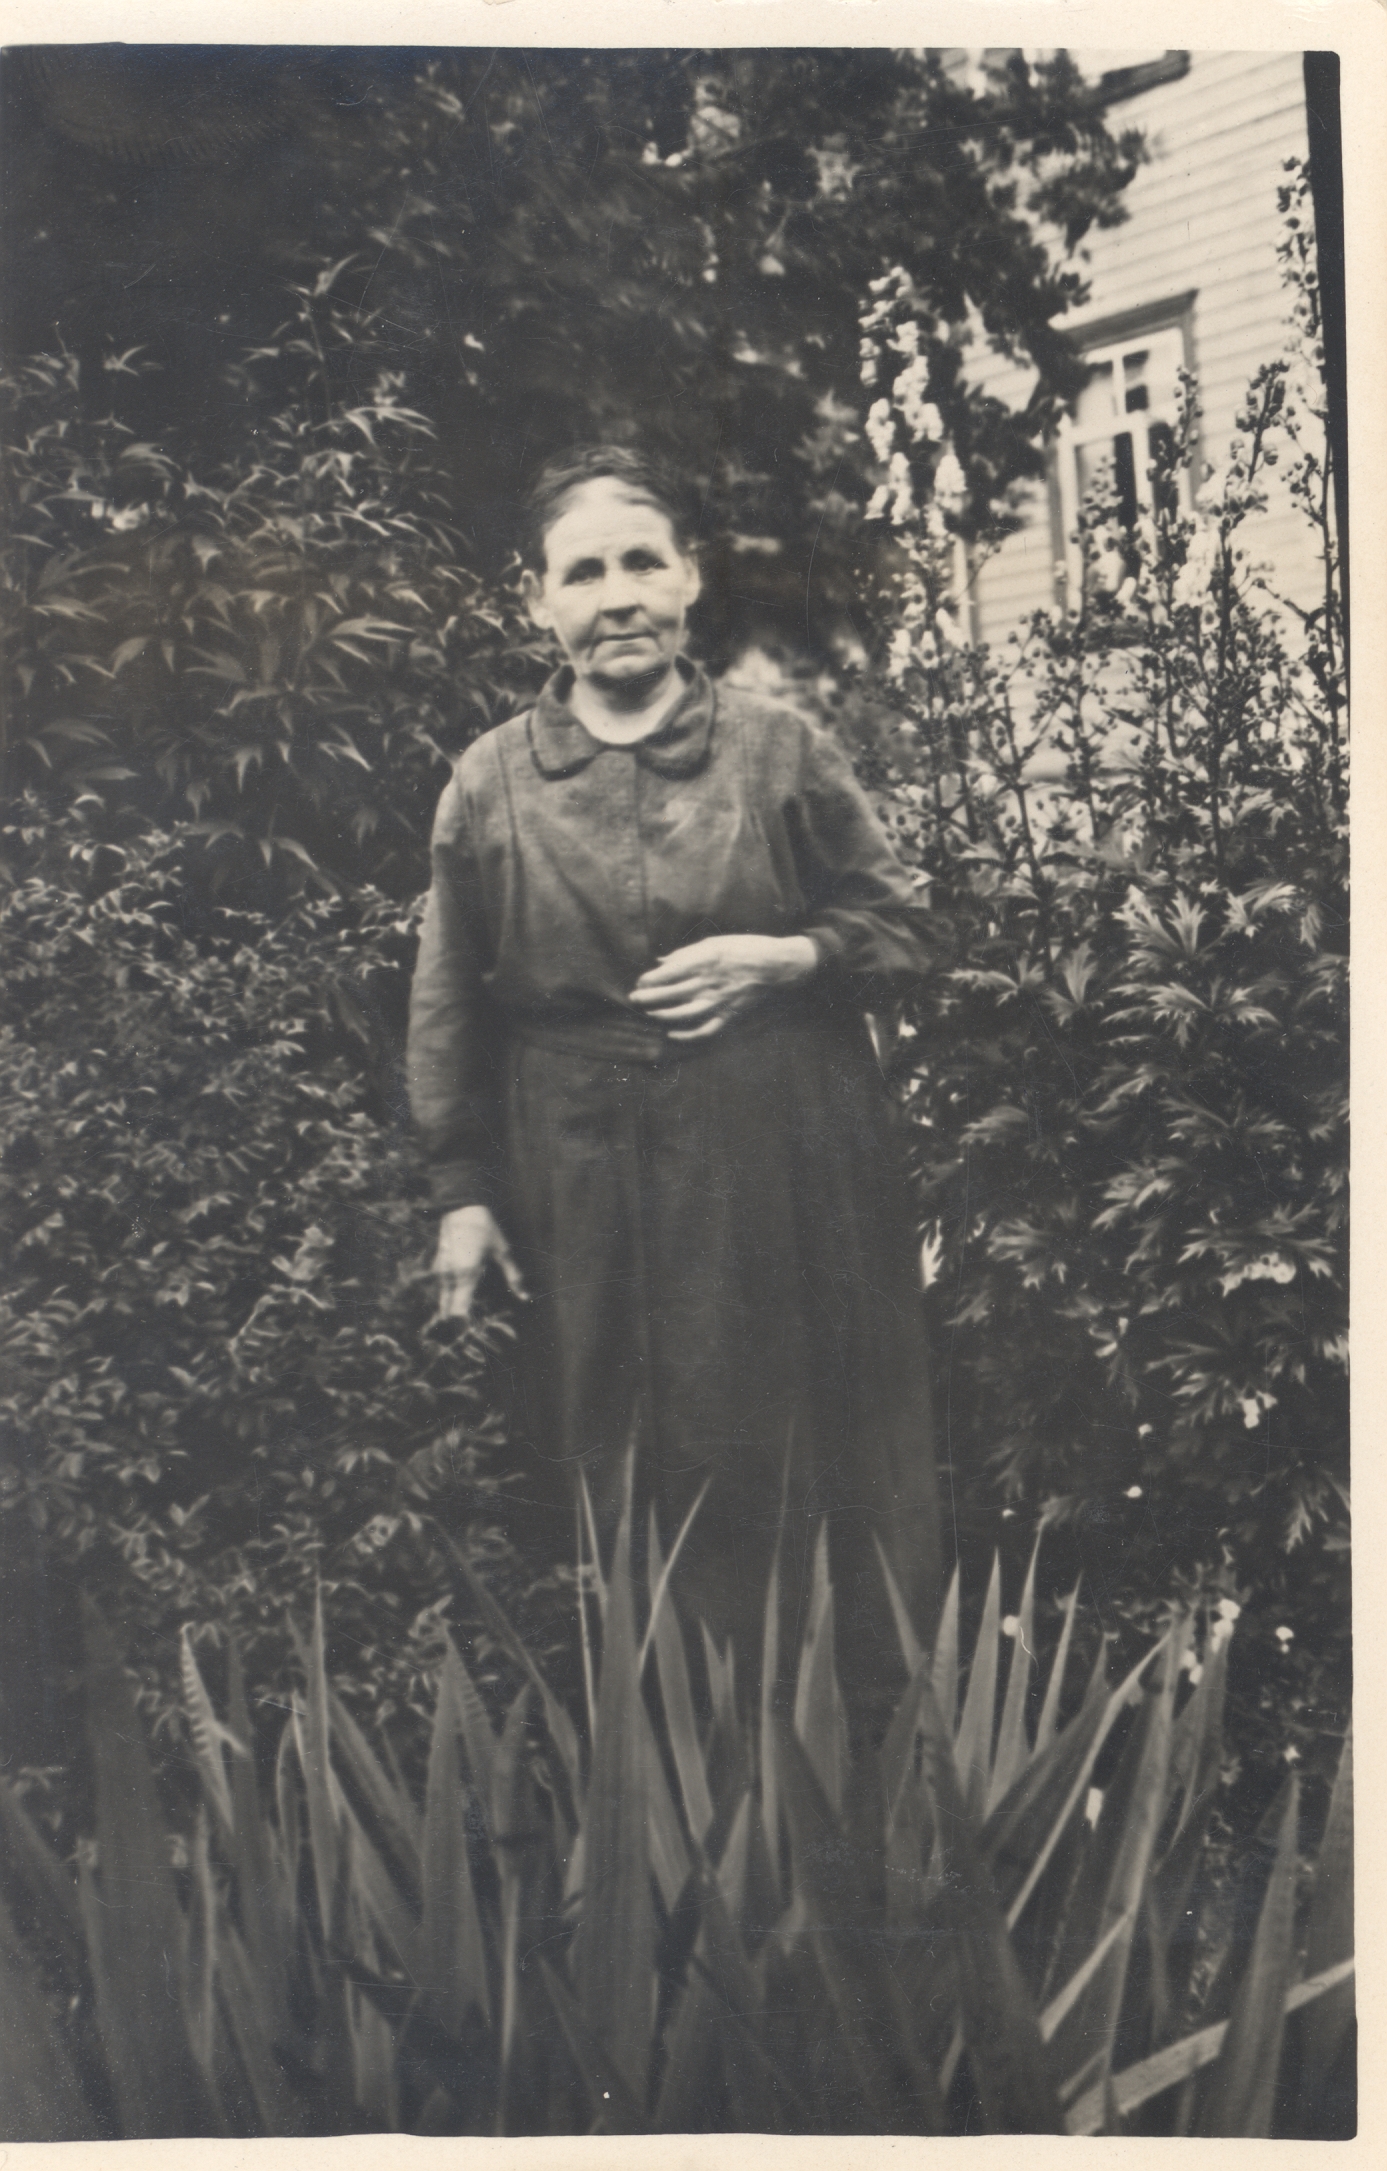 Hugo Raudsepp's mother Marie